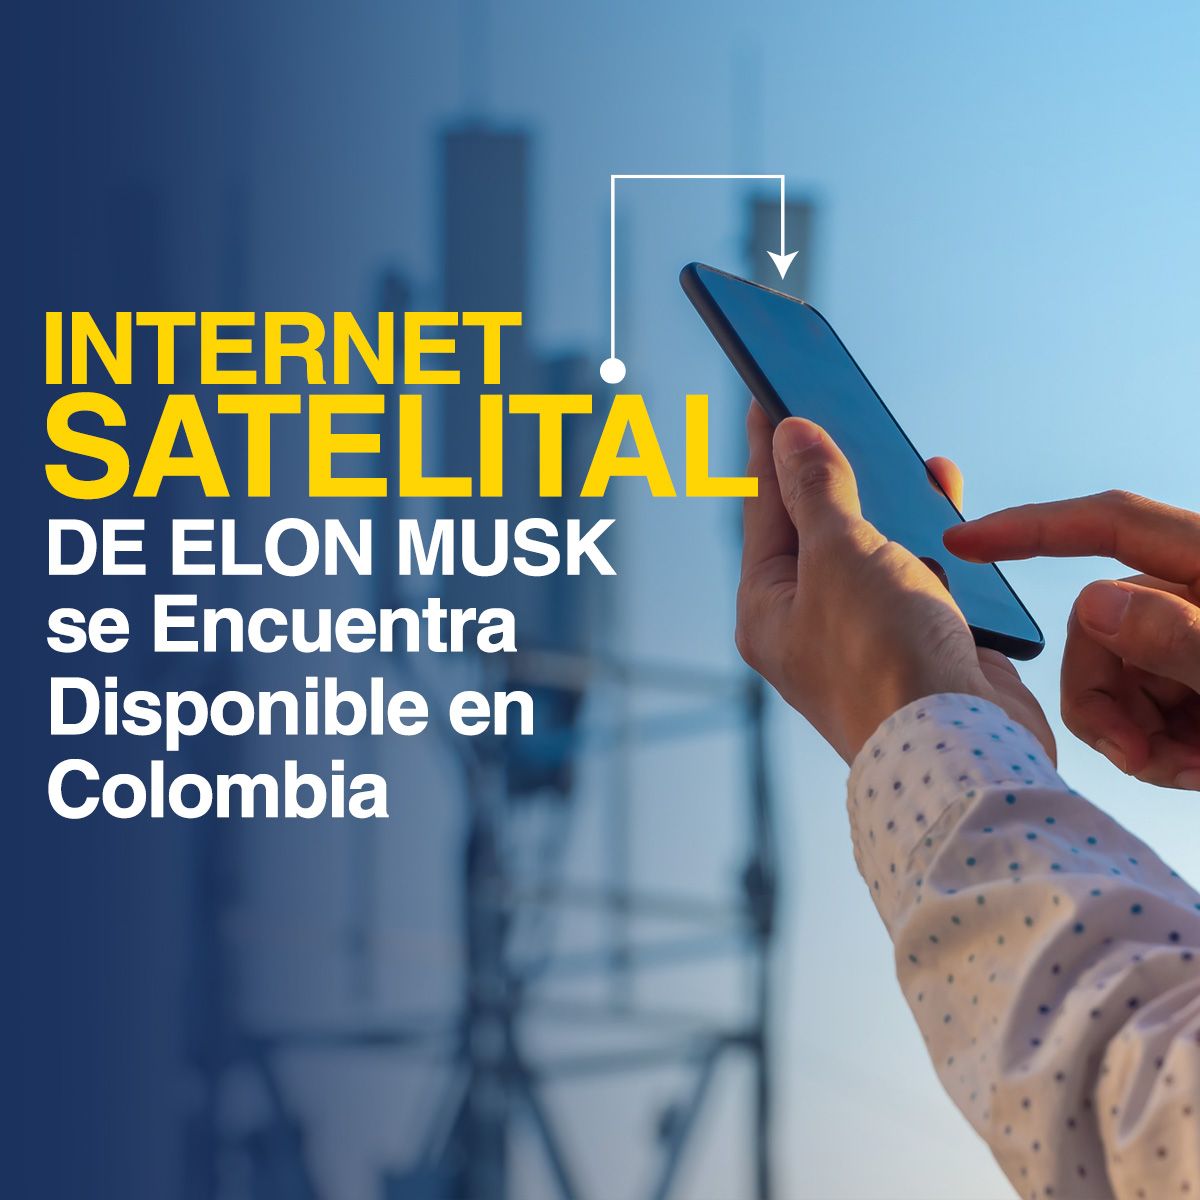 Internet Satelital de Elon Musk se Encuentra Disponible en Colombia